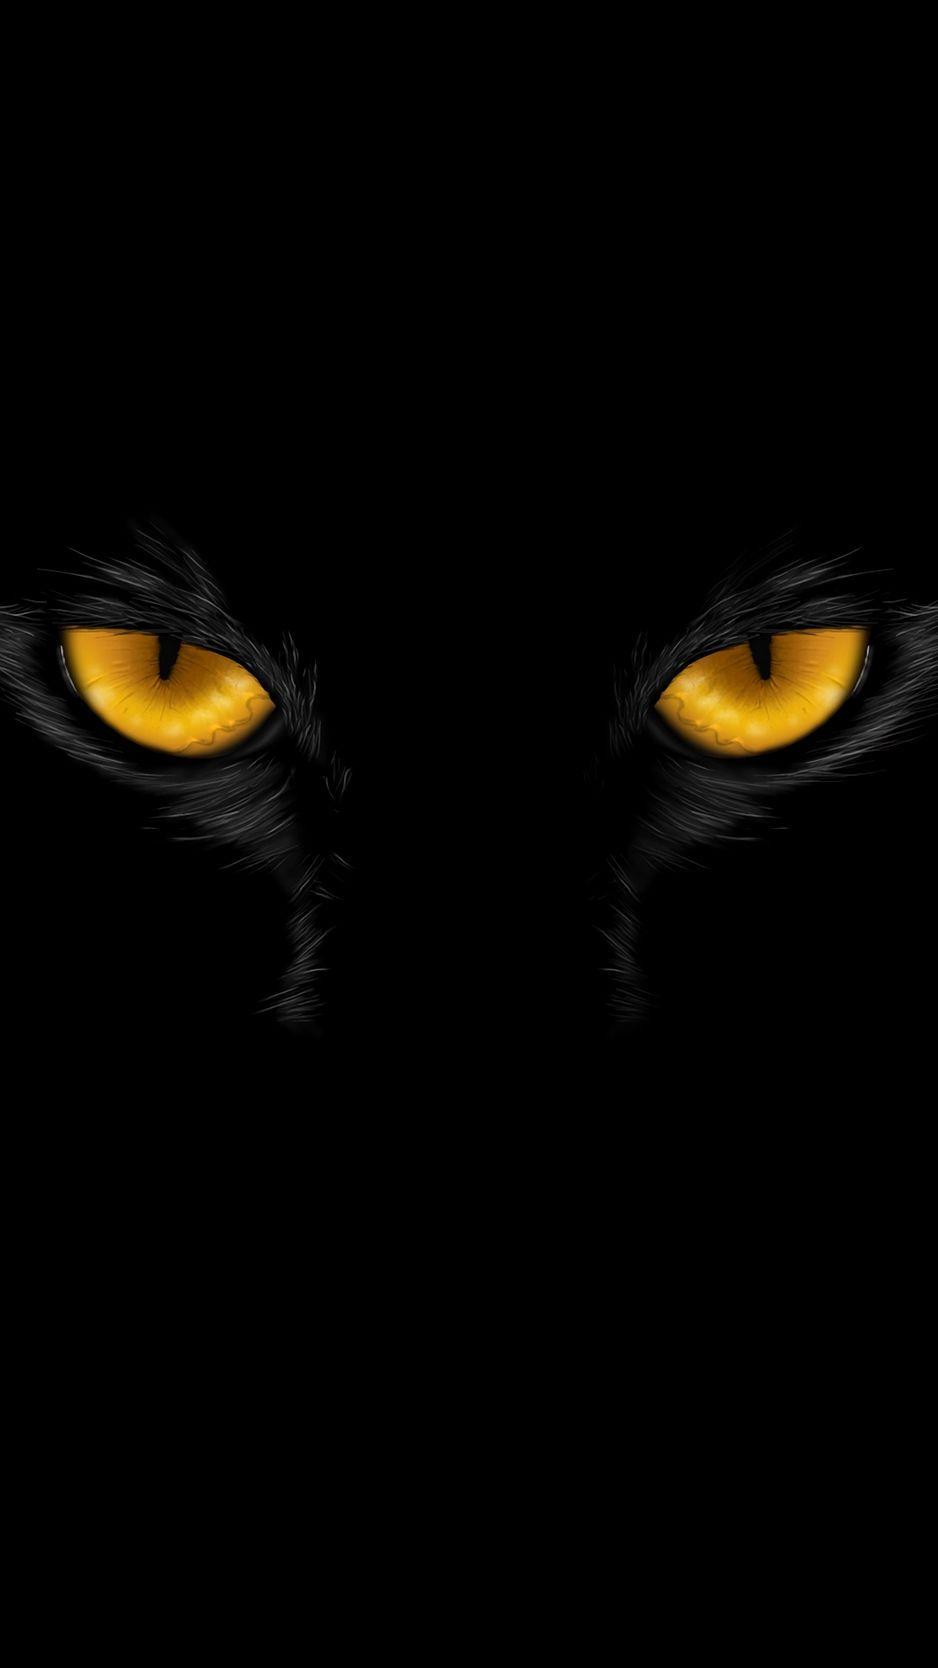 Black Panther Eyes Wallpapers - Top Free Black Panther Eyes Backgrounds